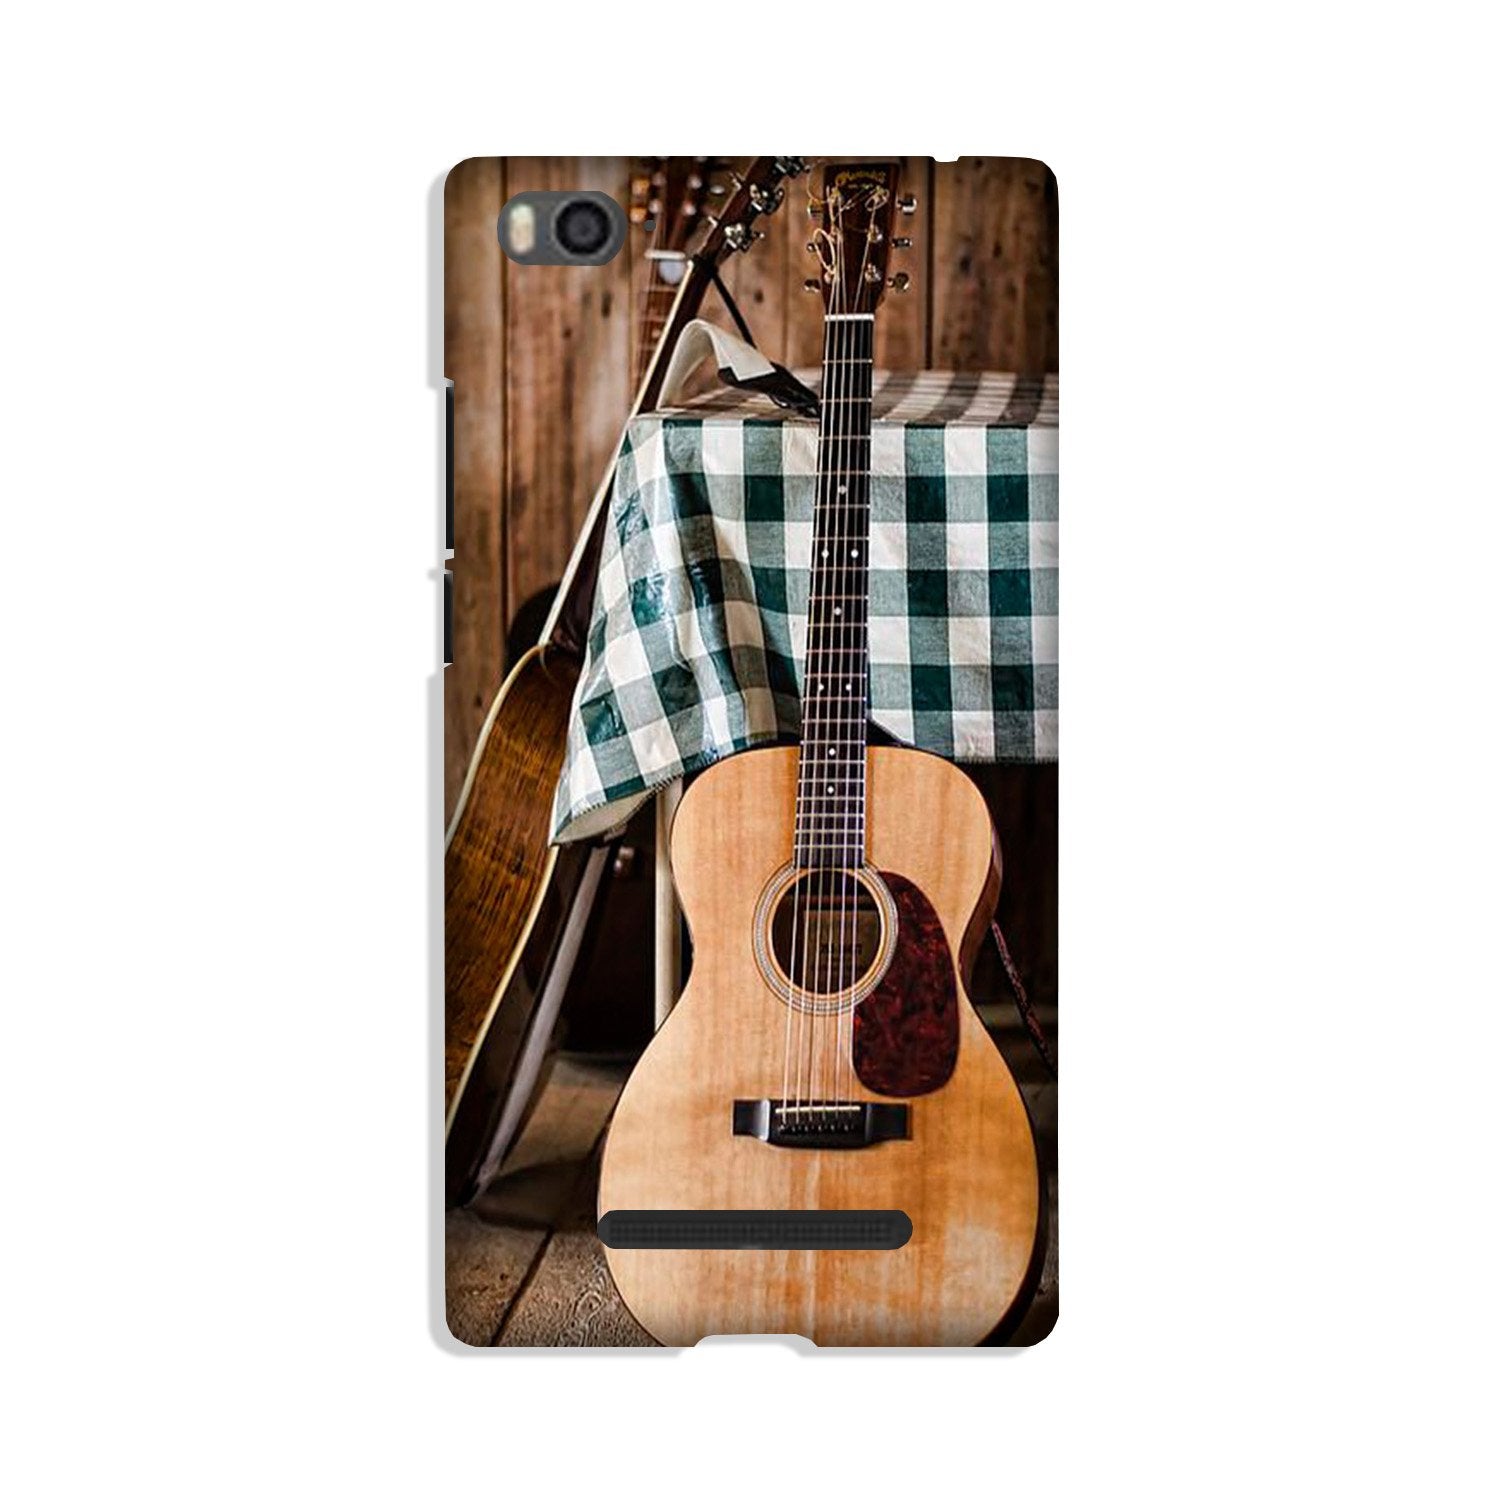 Guitar2 Case for Xiaomi Redmi 5A